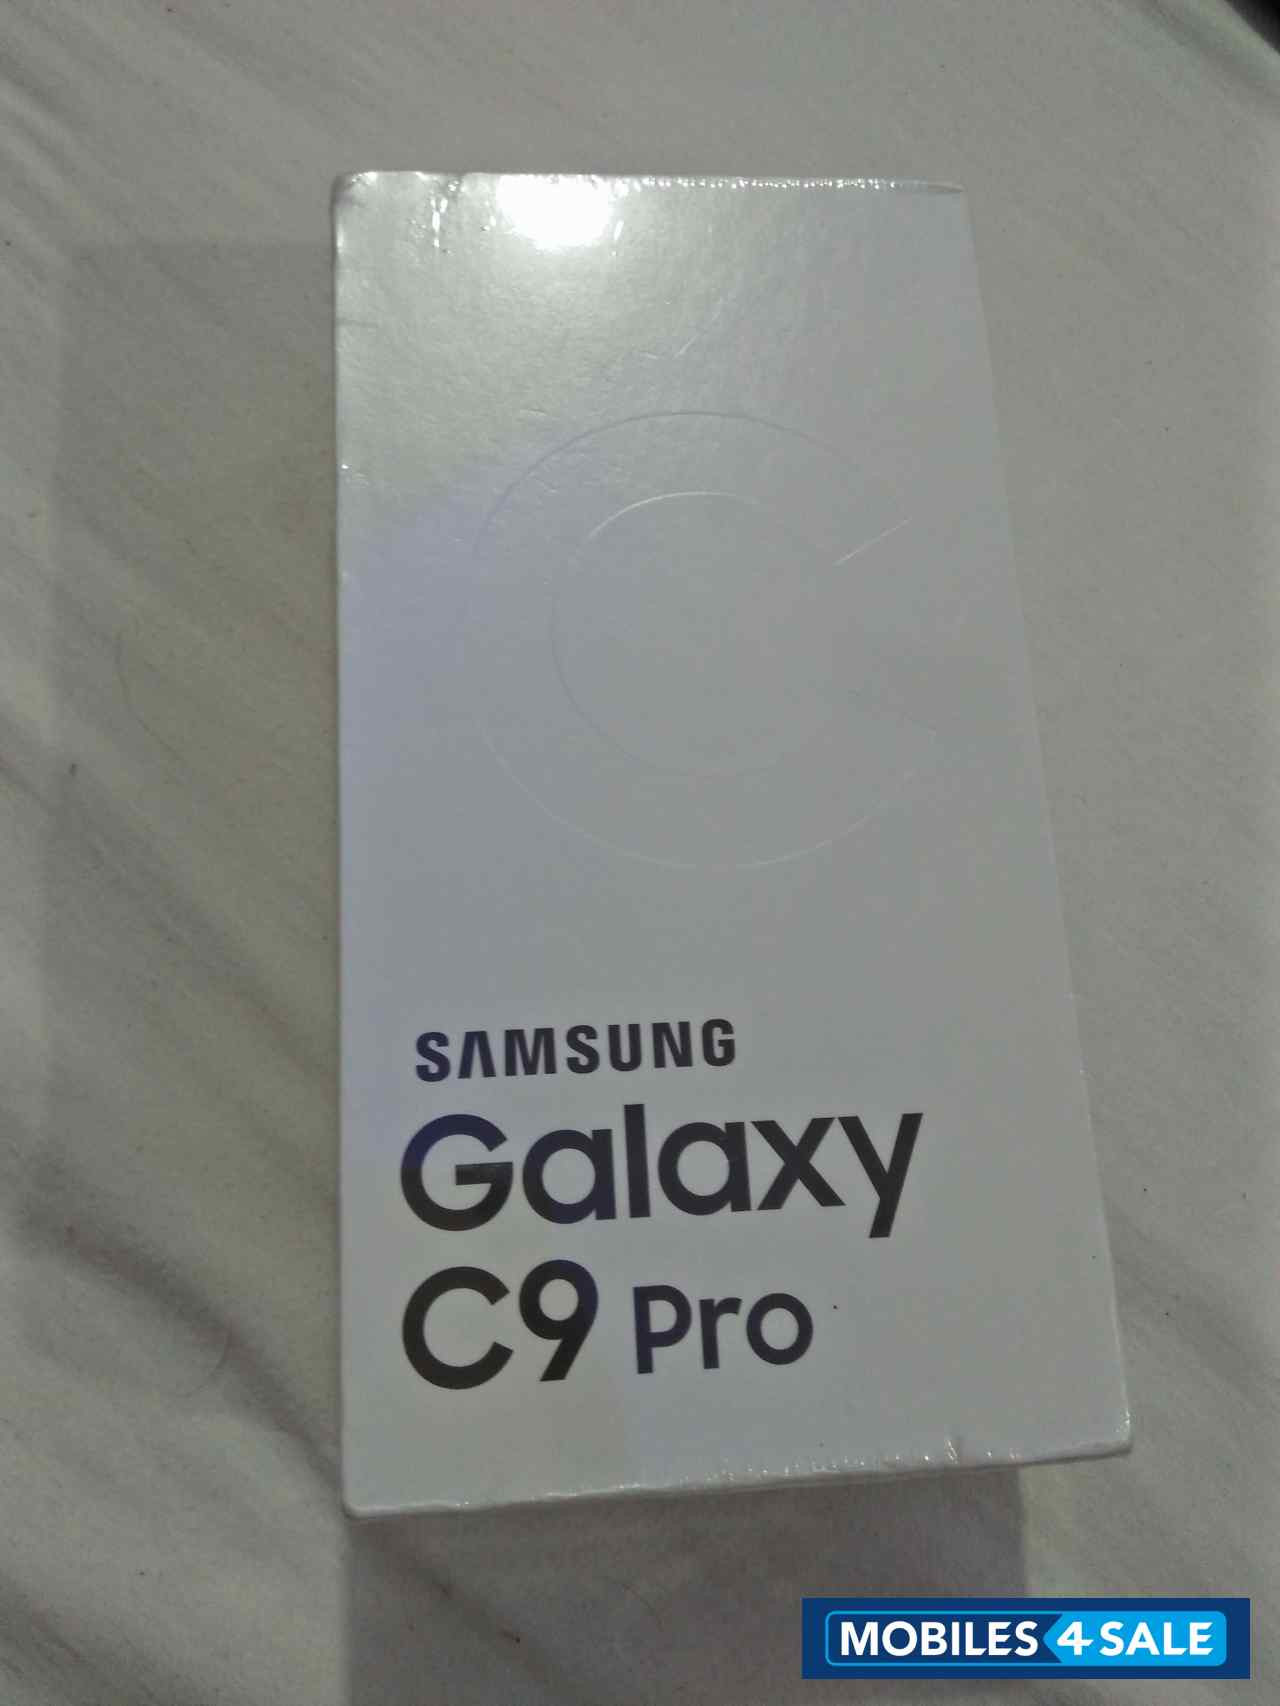 Gold Samsung Galaxy C9 Pro